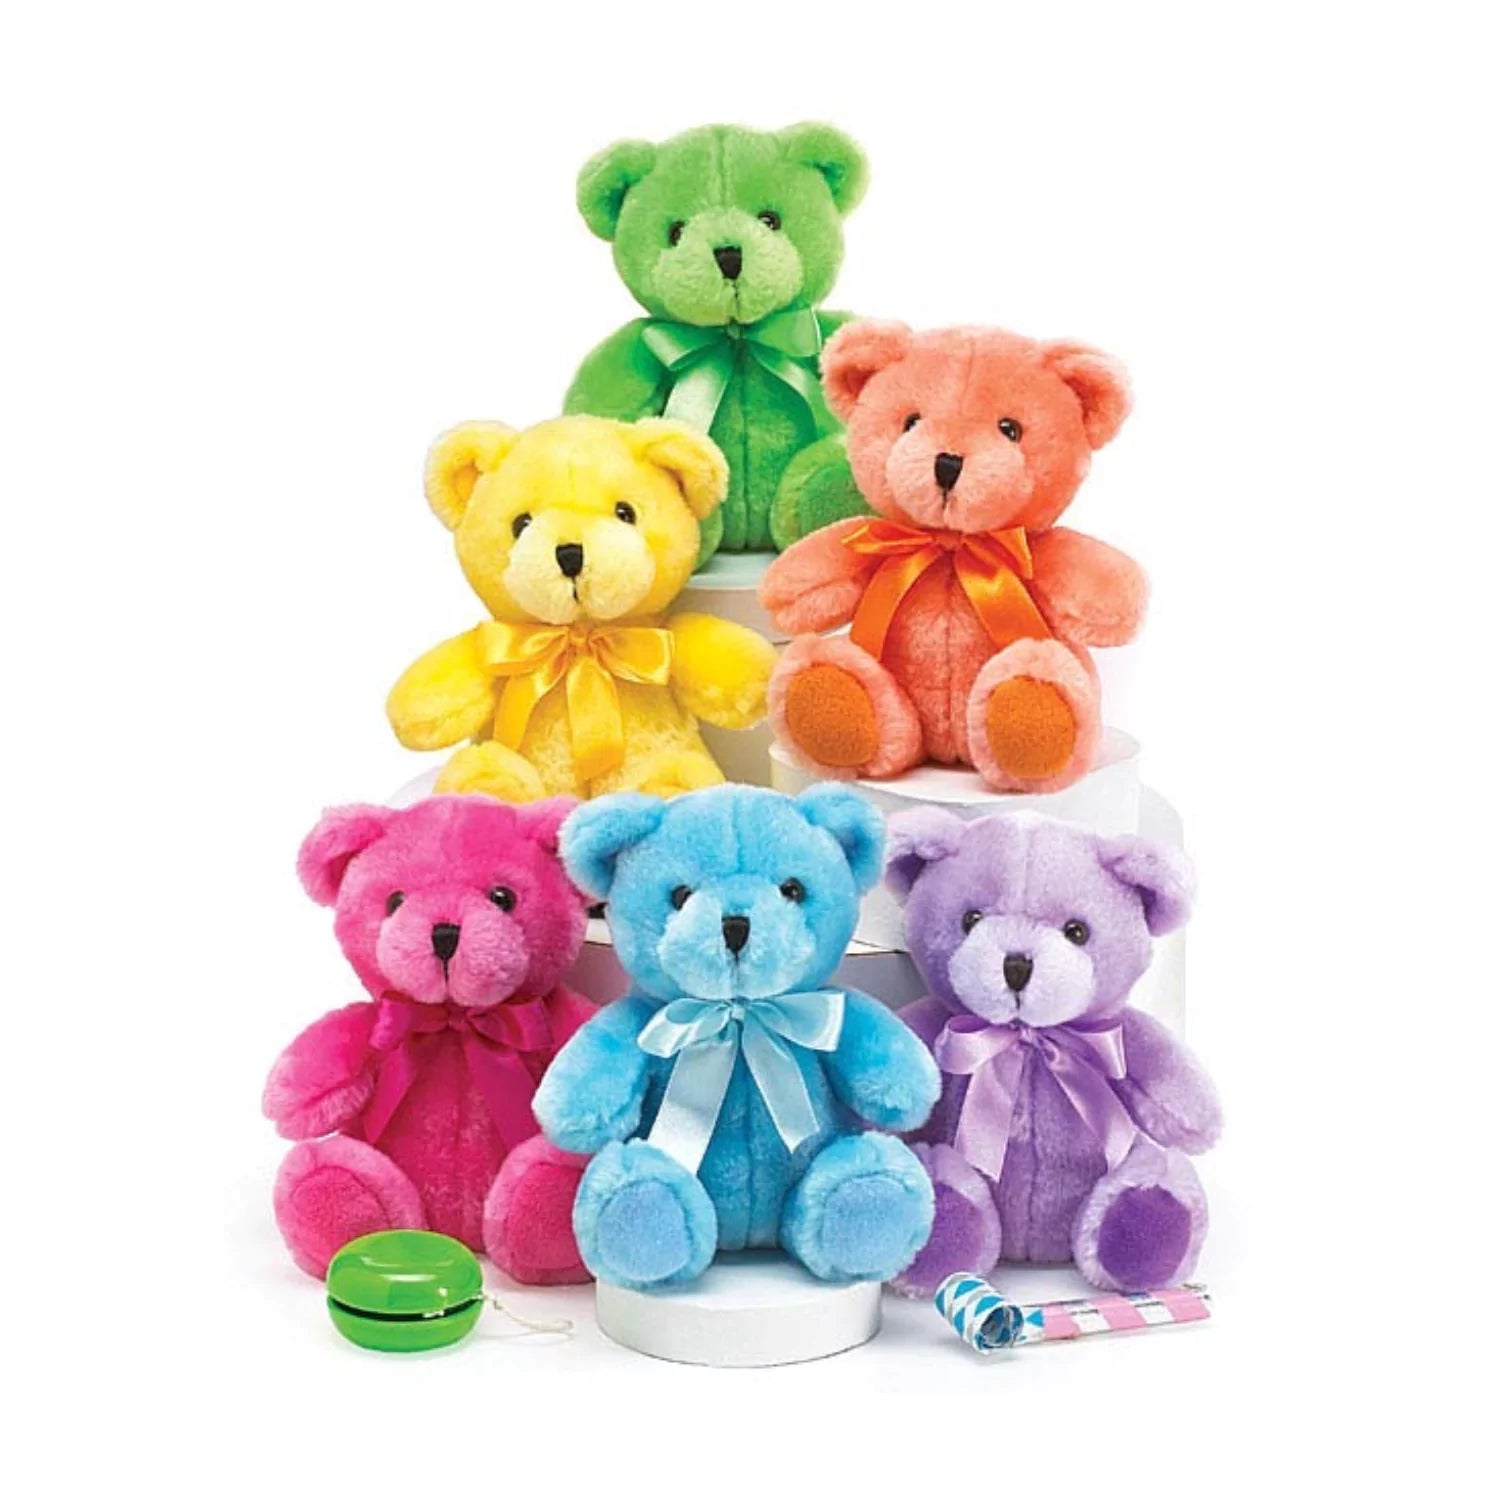 Stuffed Animal Add-On 6" Colorful Bears